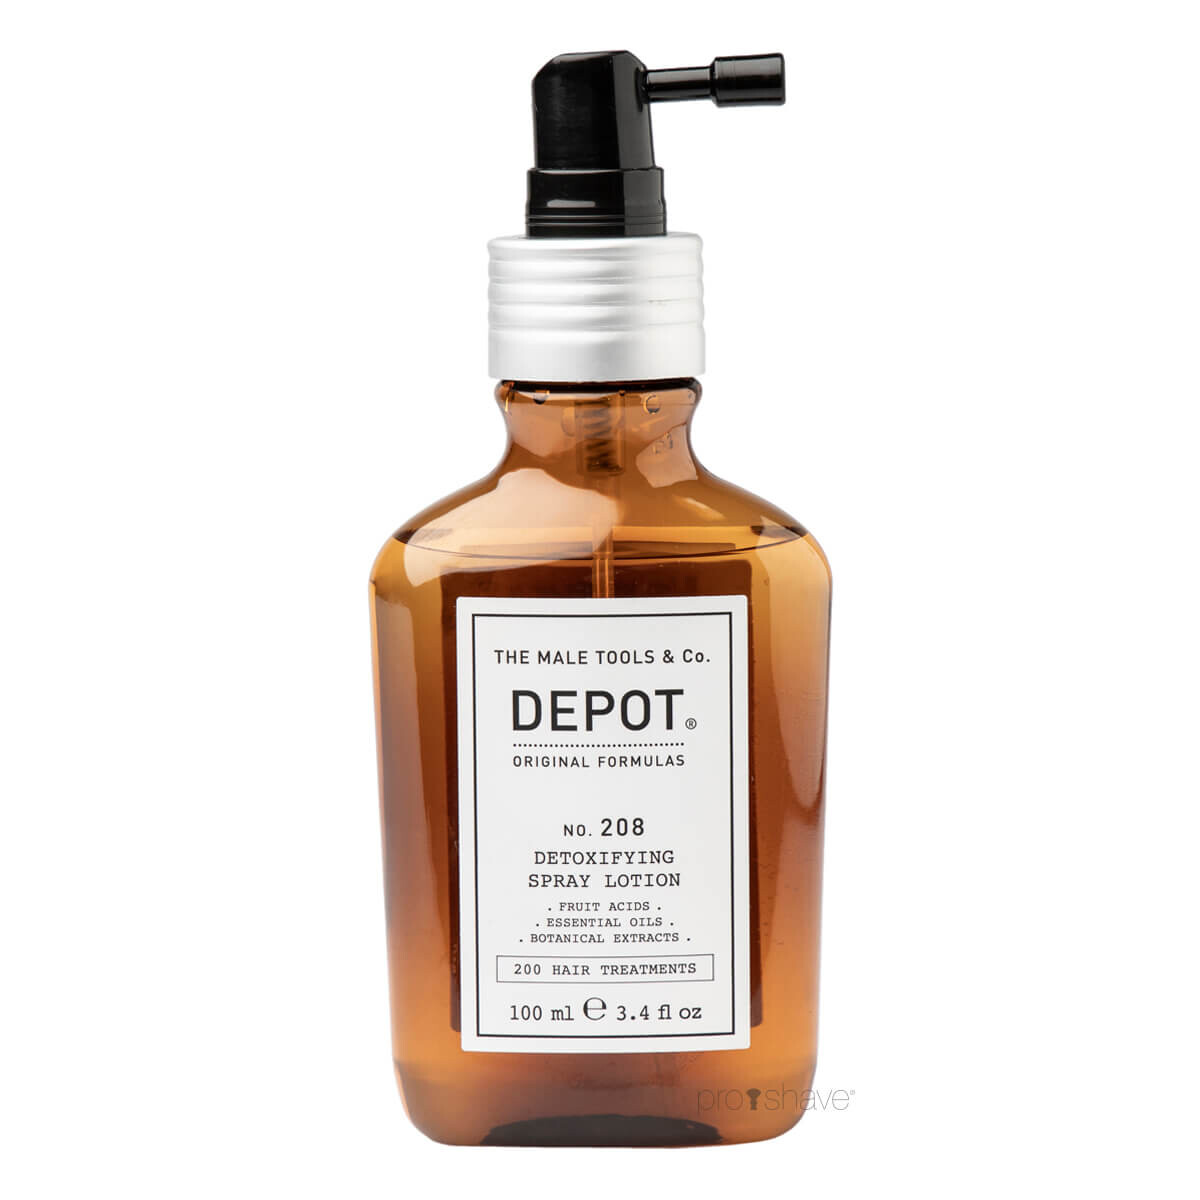 #2 - Depot Detoxifying Spray Lotion, No. 208, 100 ml.